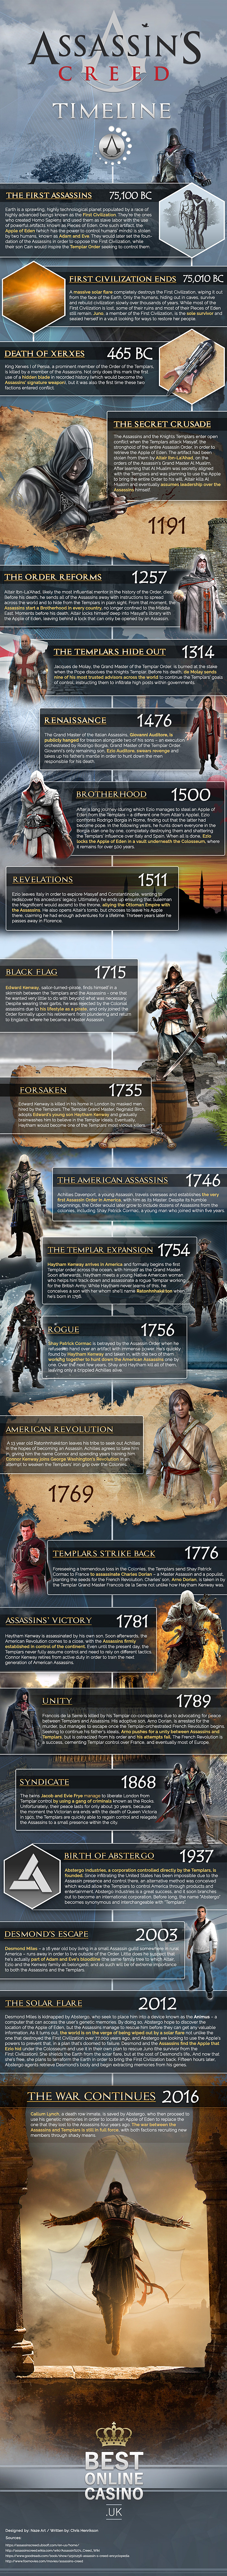 Assassins Creed Timeline